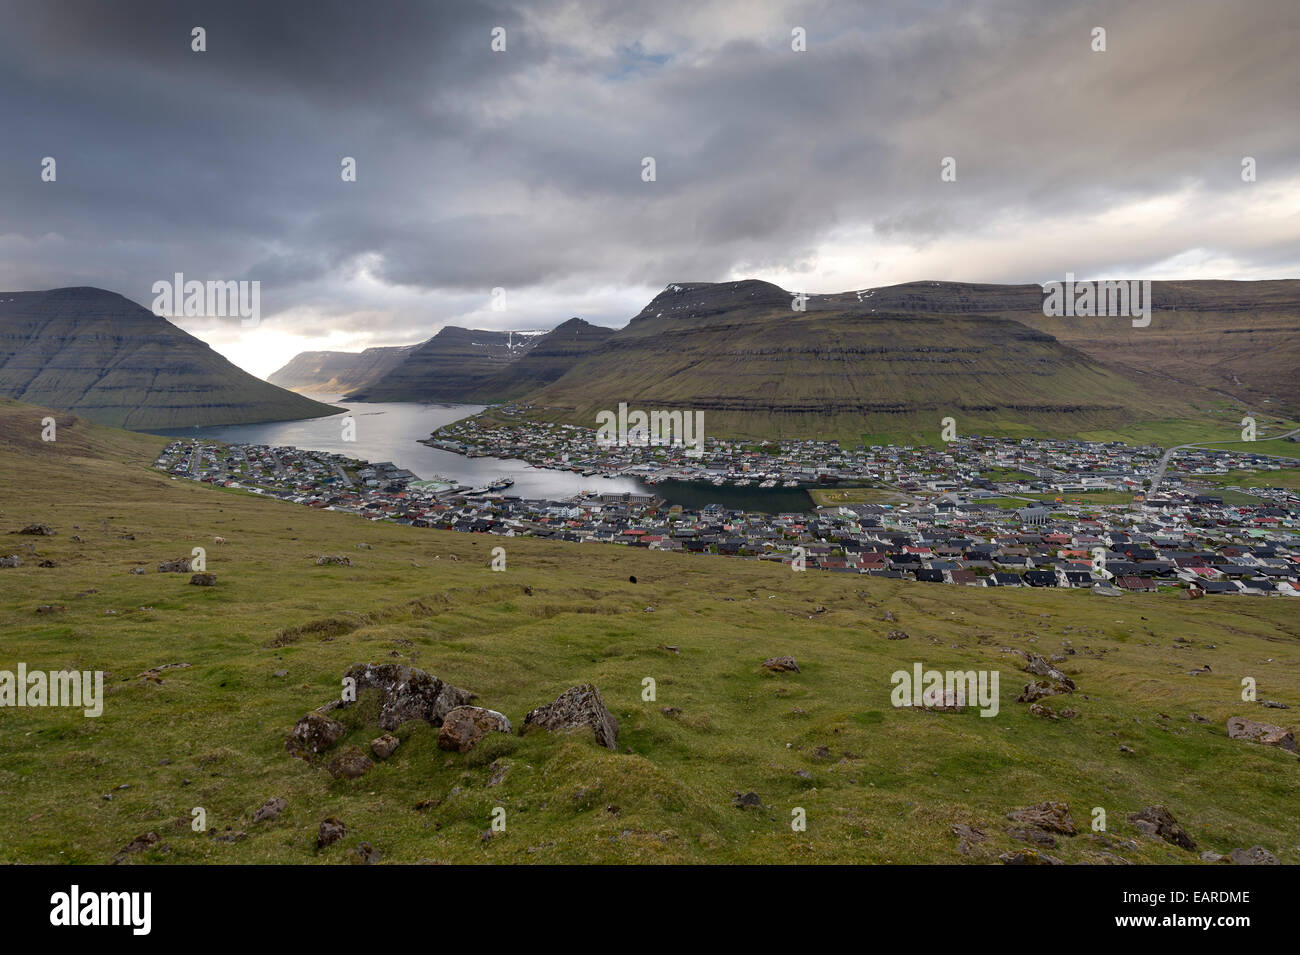 Mountains, fjord in the evening light, port and city, Klaksvik, Borðoy, Norðoyar, Faroe Islands, Denmark Stock Photo